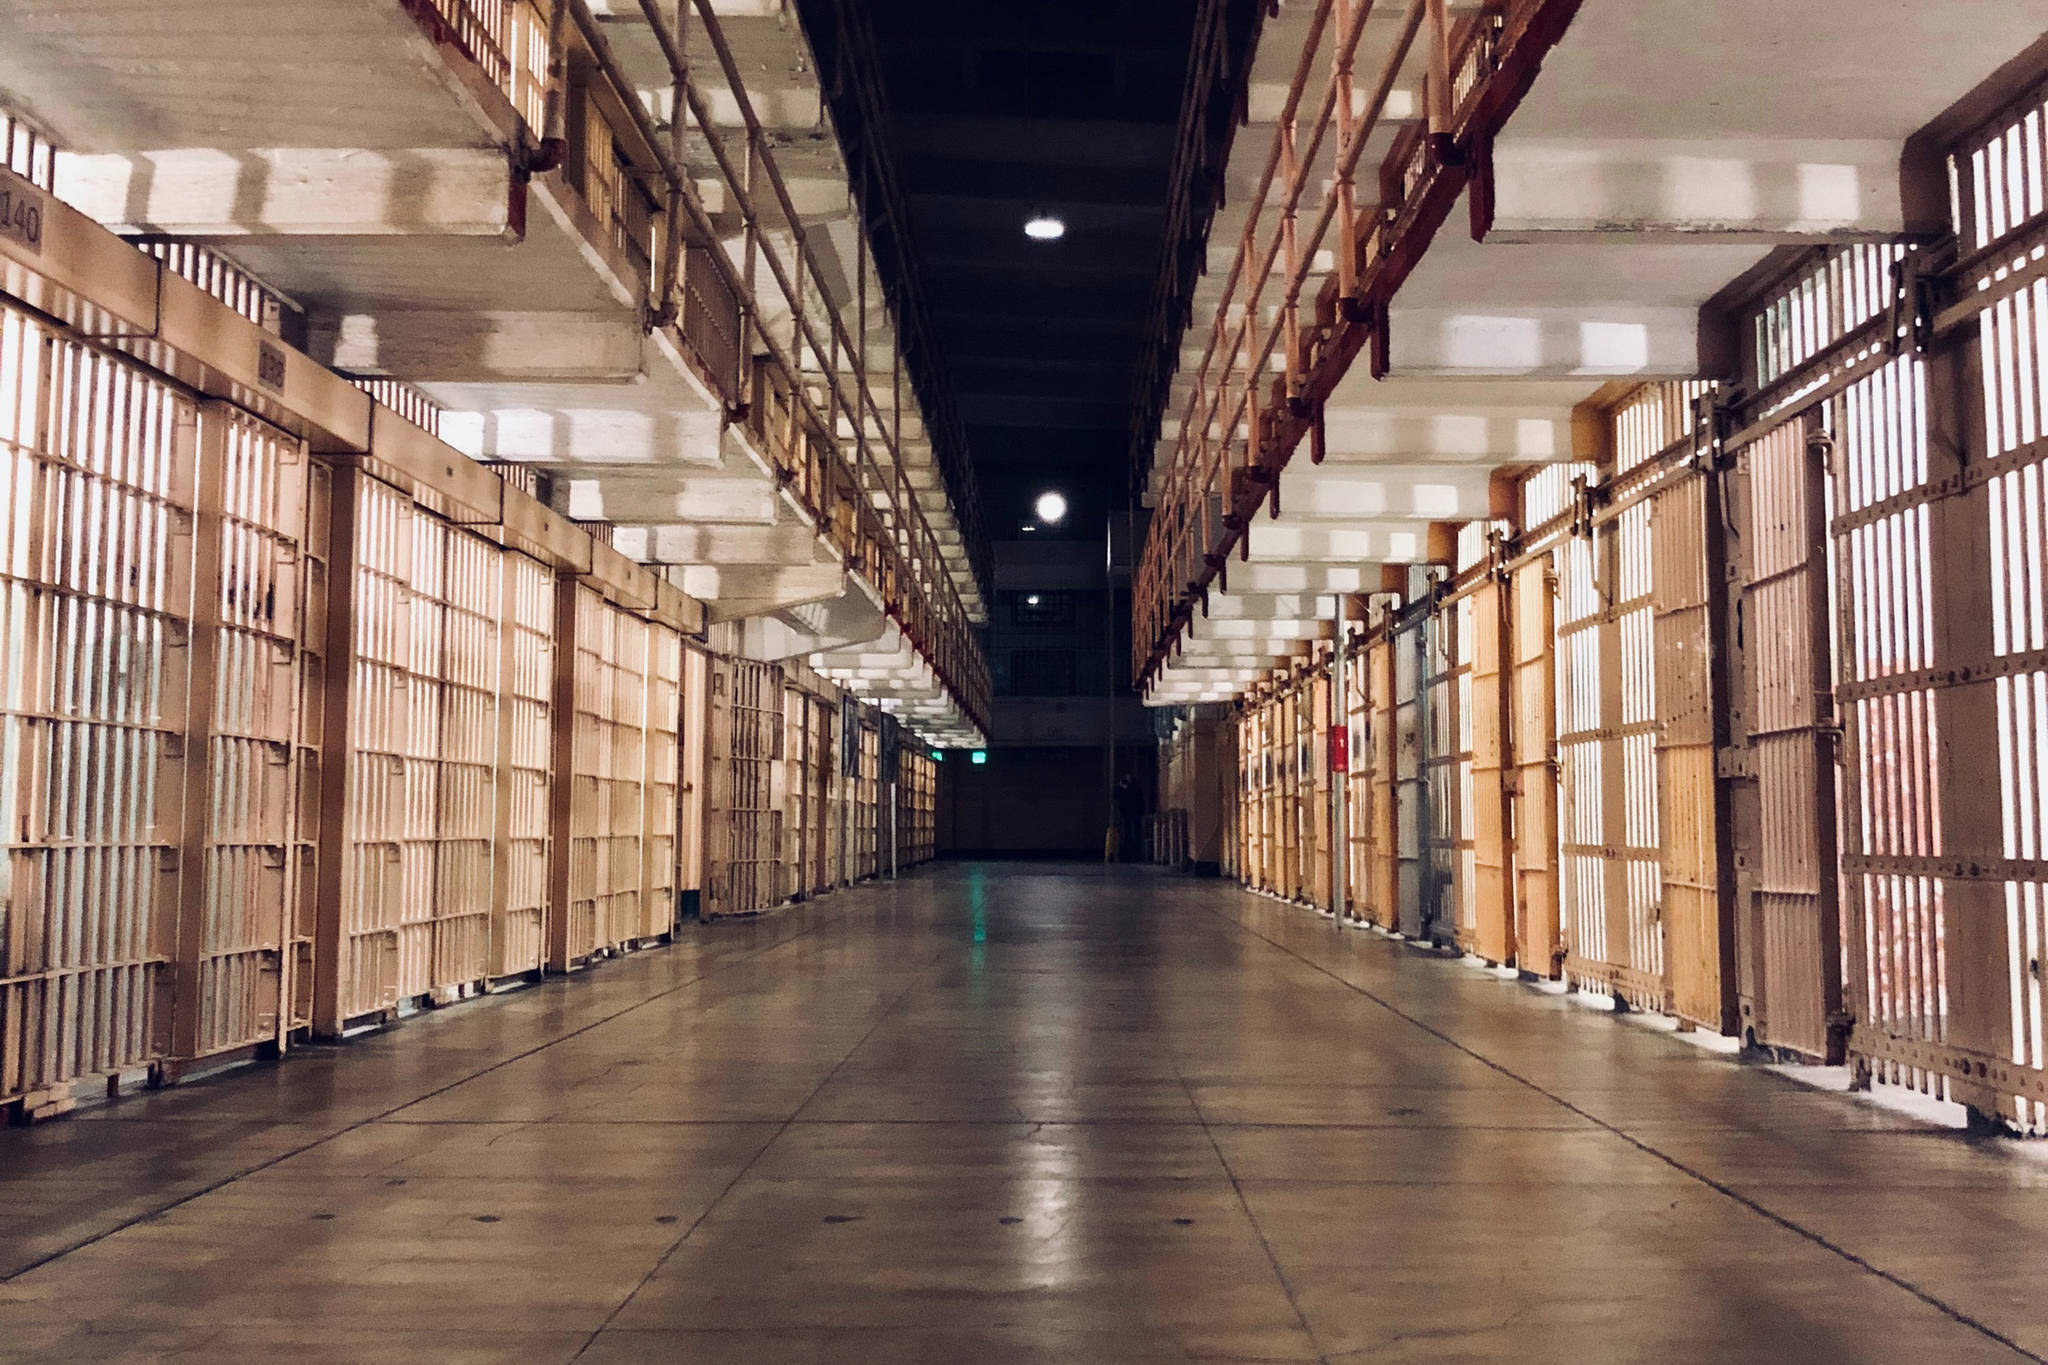 Inmates take control of Seward prison section